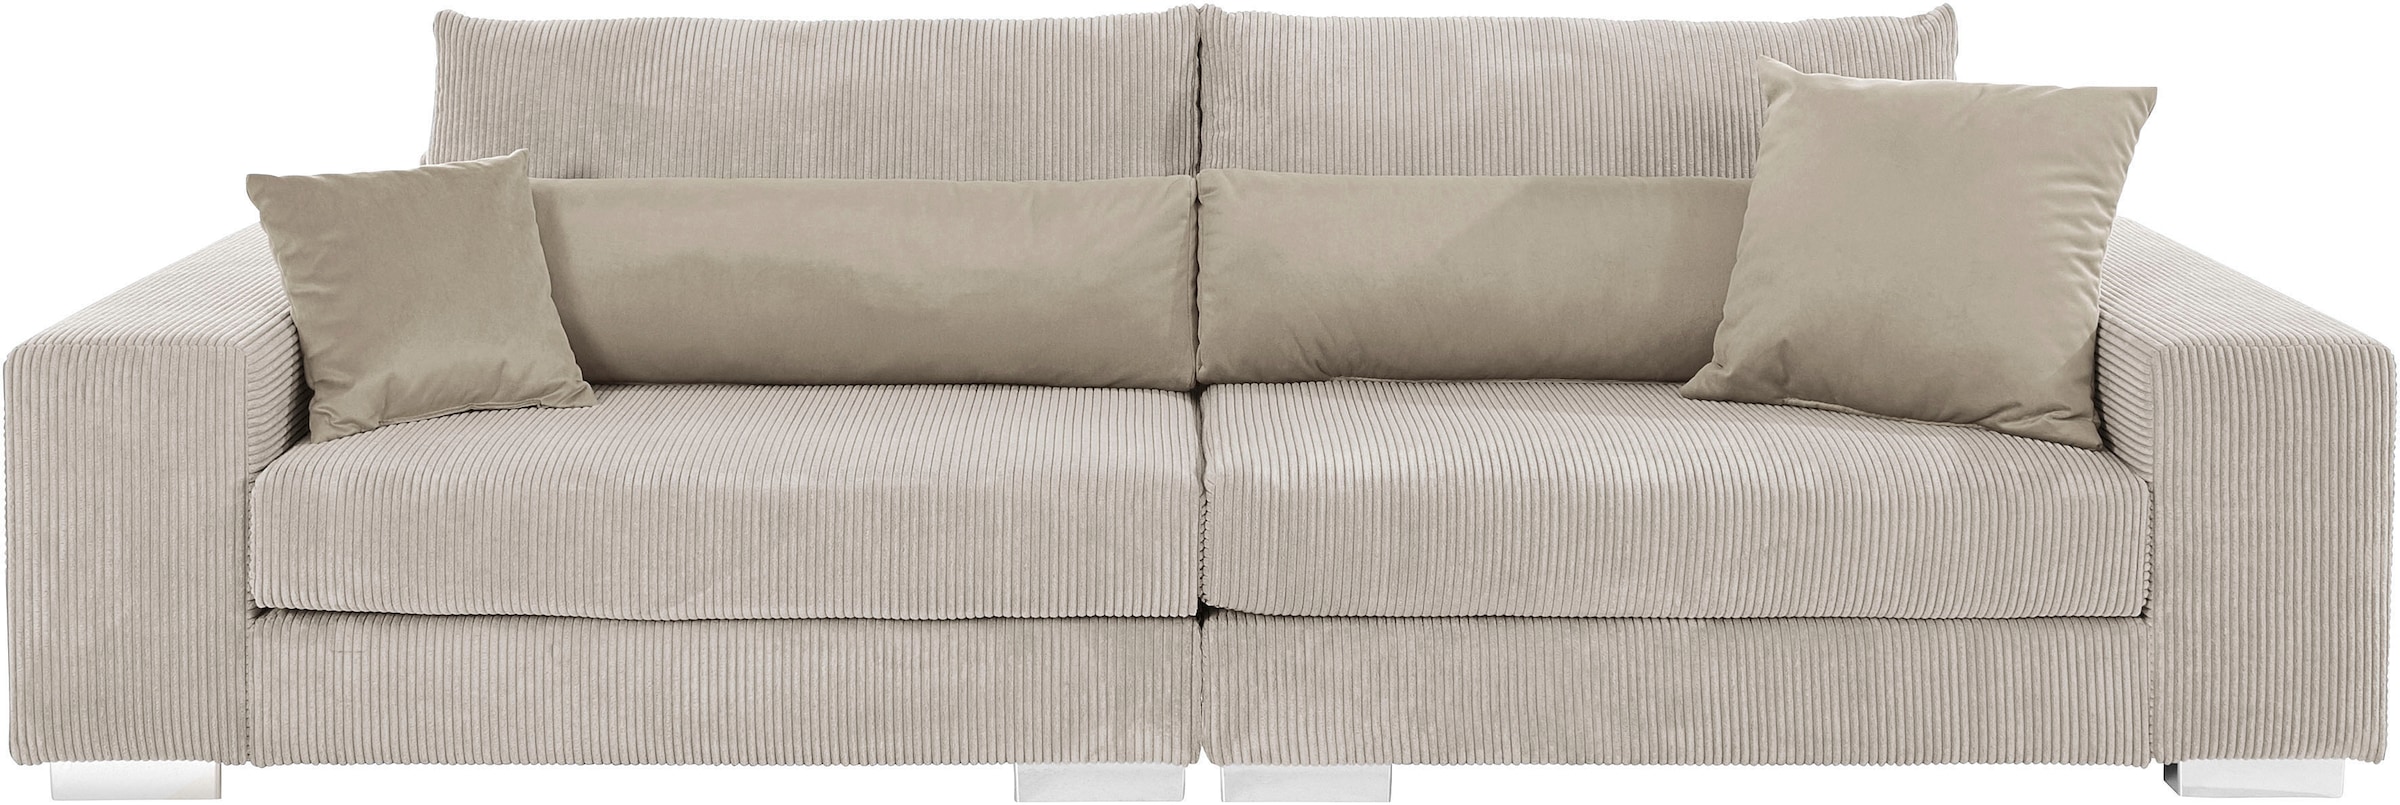 Home affaire Big-Sofa »Vasco«, Breite 277 cm, inkl. 6-teiliges Kissenset,  in Cord bestellen bei OTTO